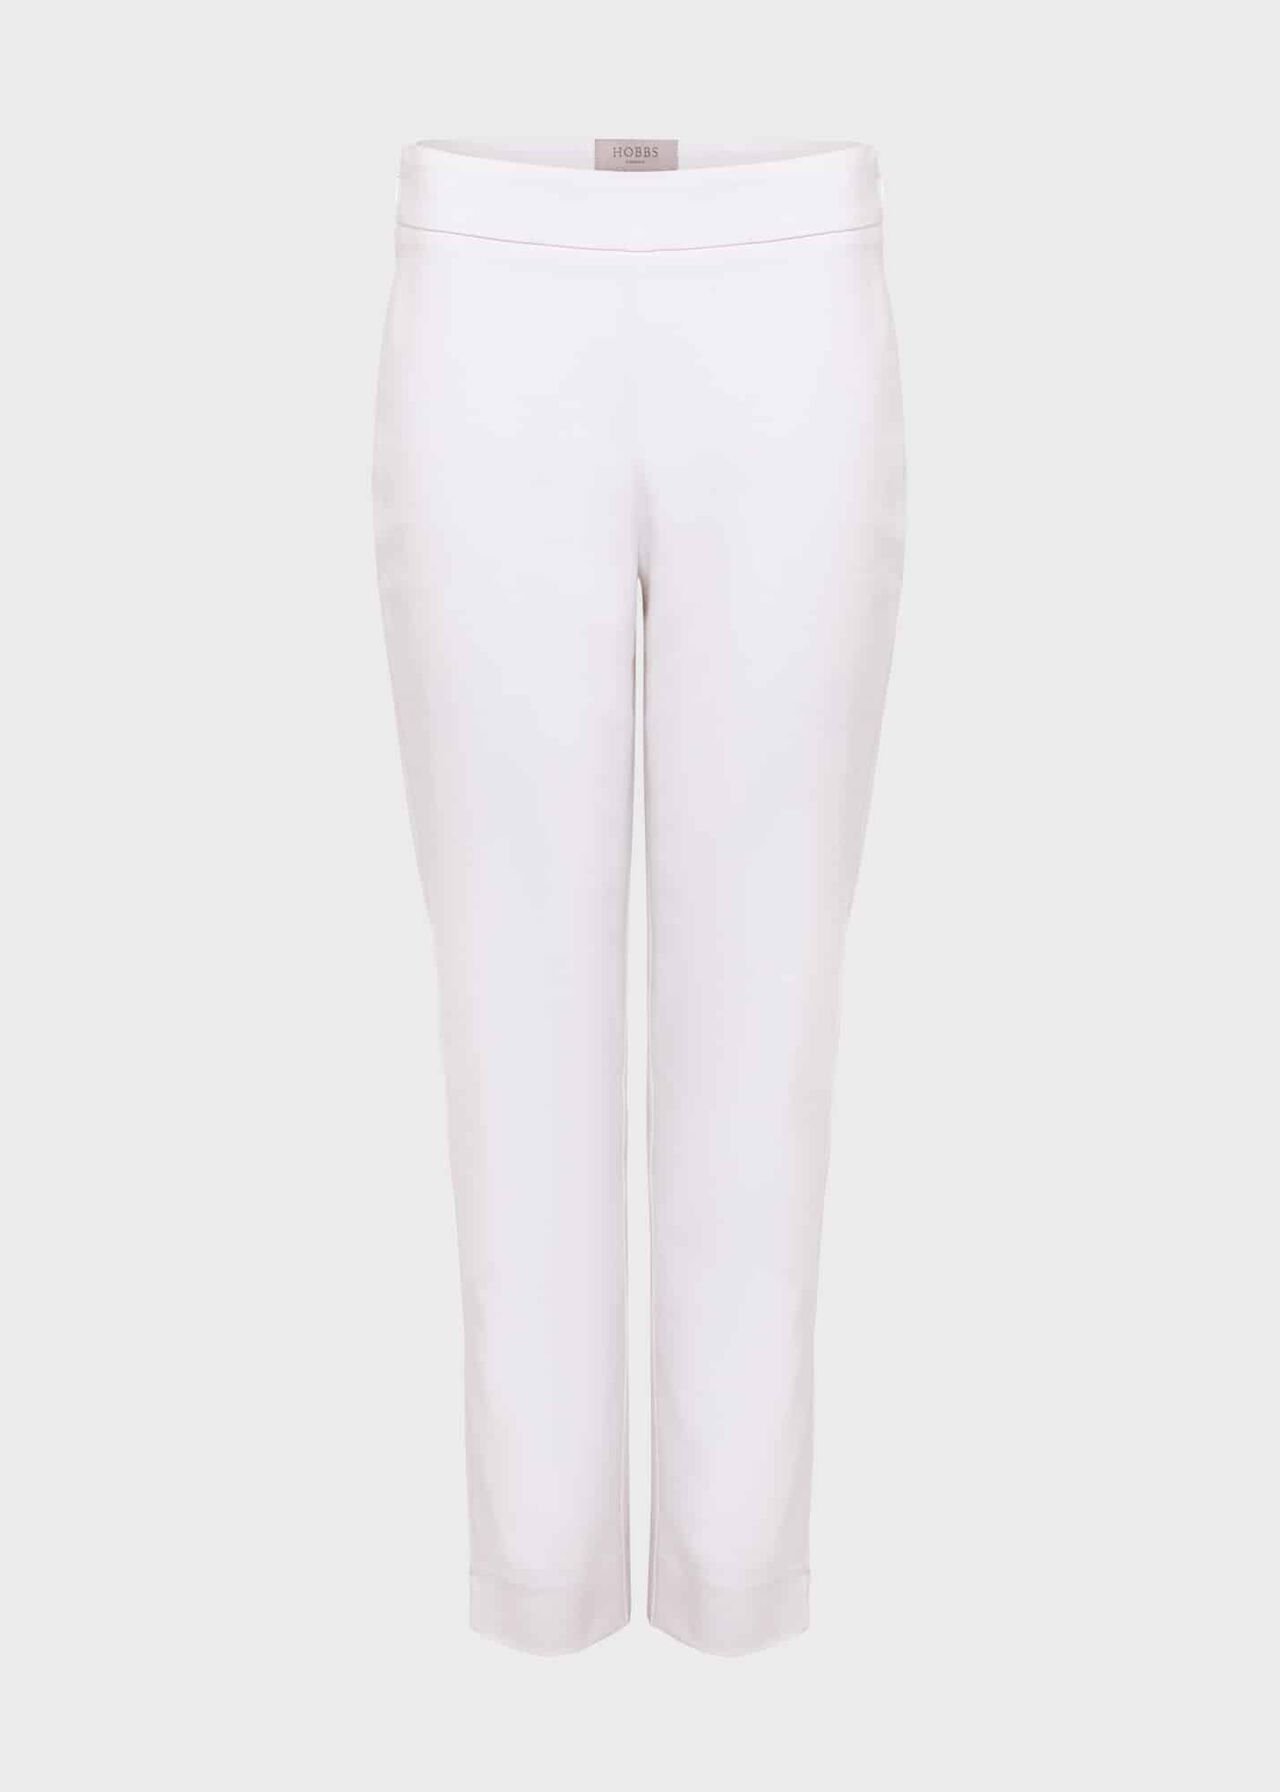 Kaya Capri Trousers, White, hi-res